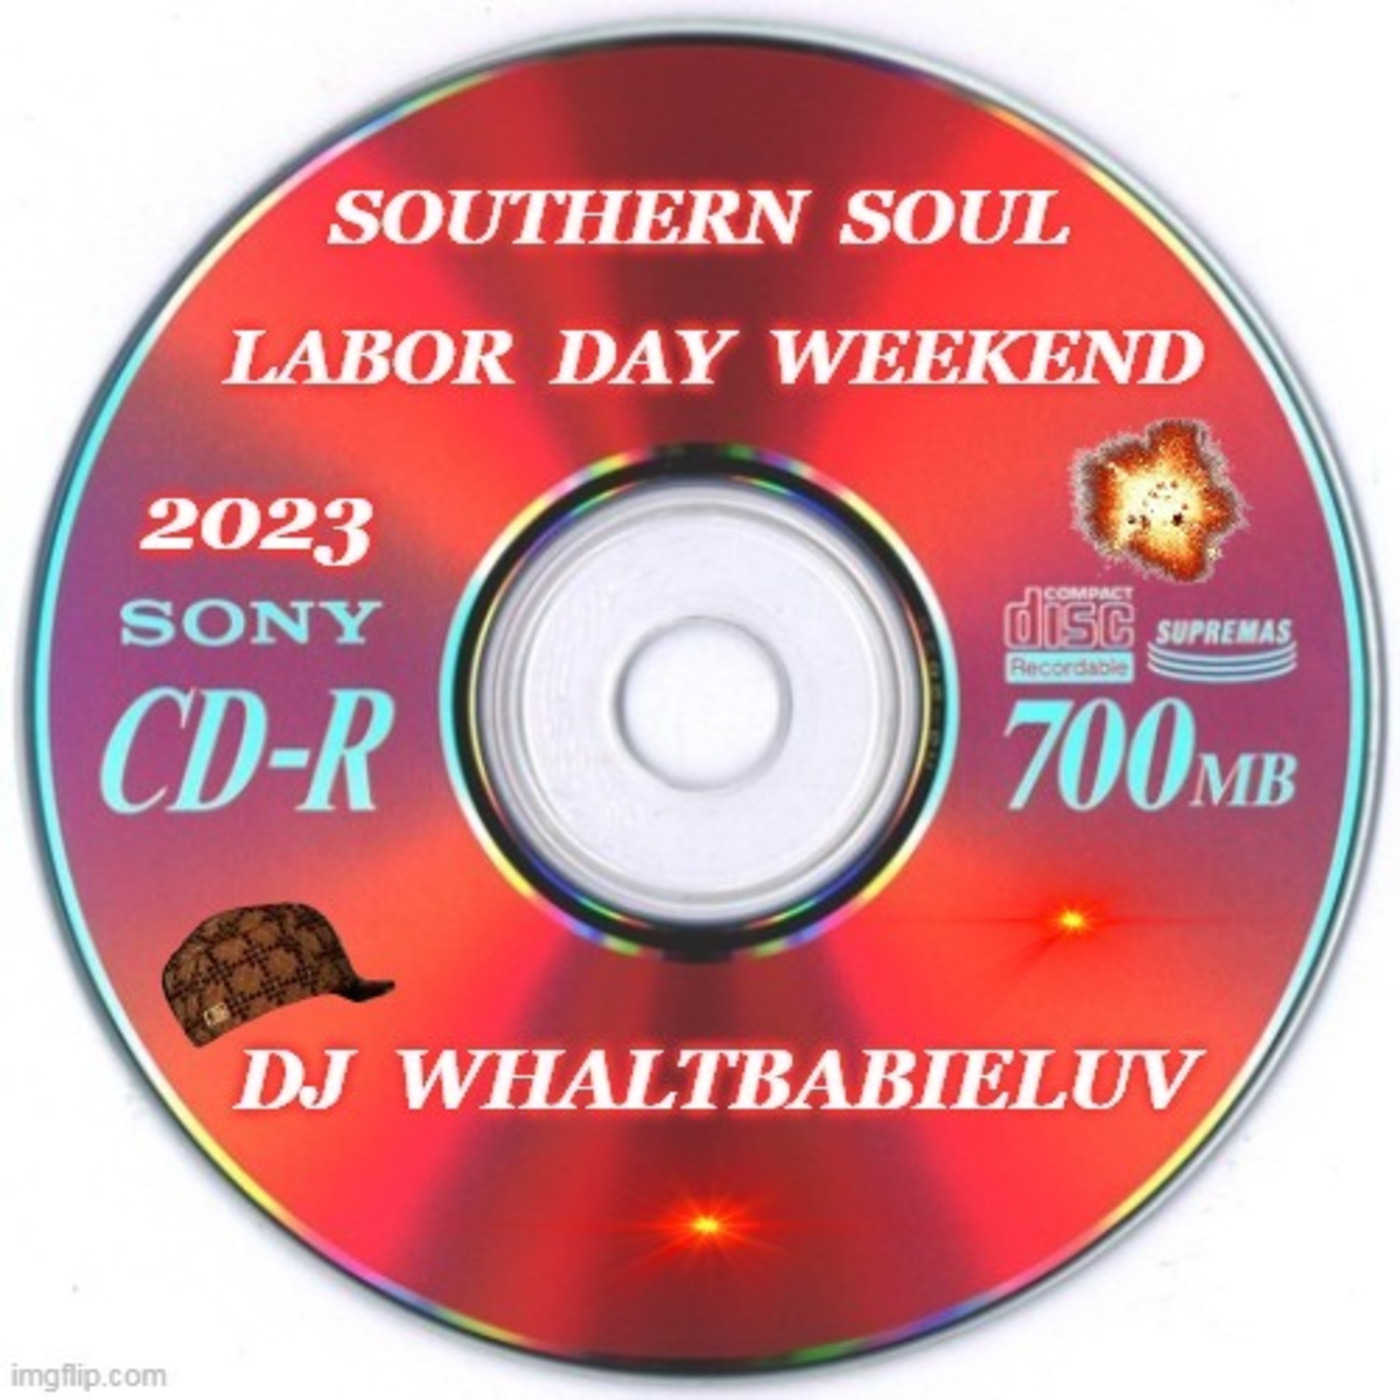 Southern Soul Labor Day Weekend 2023 (Dj WhaltBabieLuv)